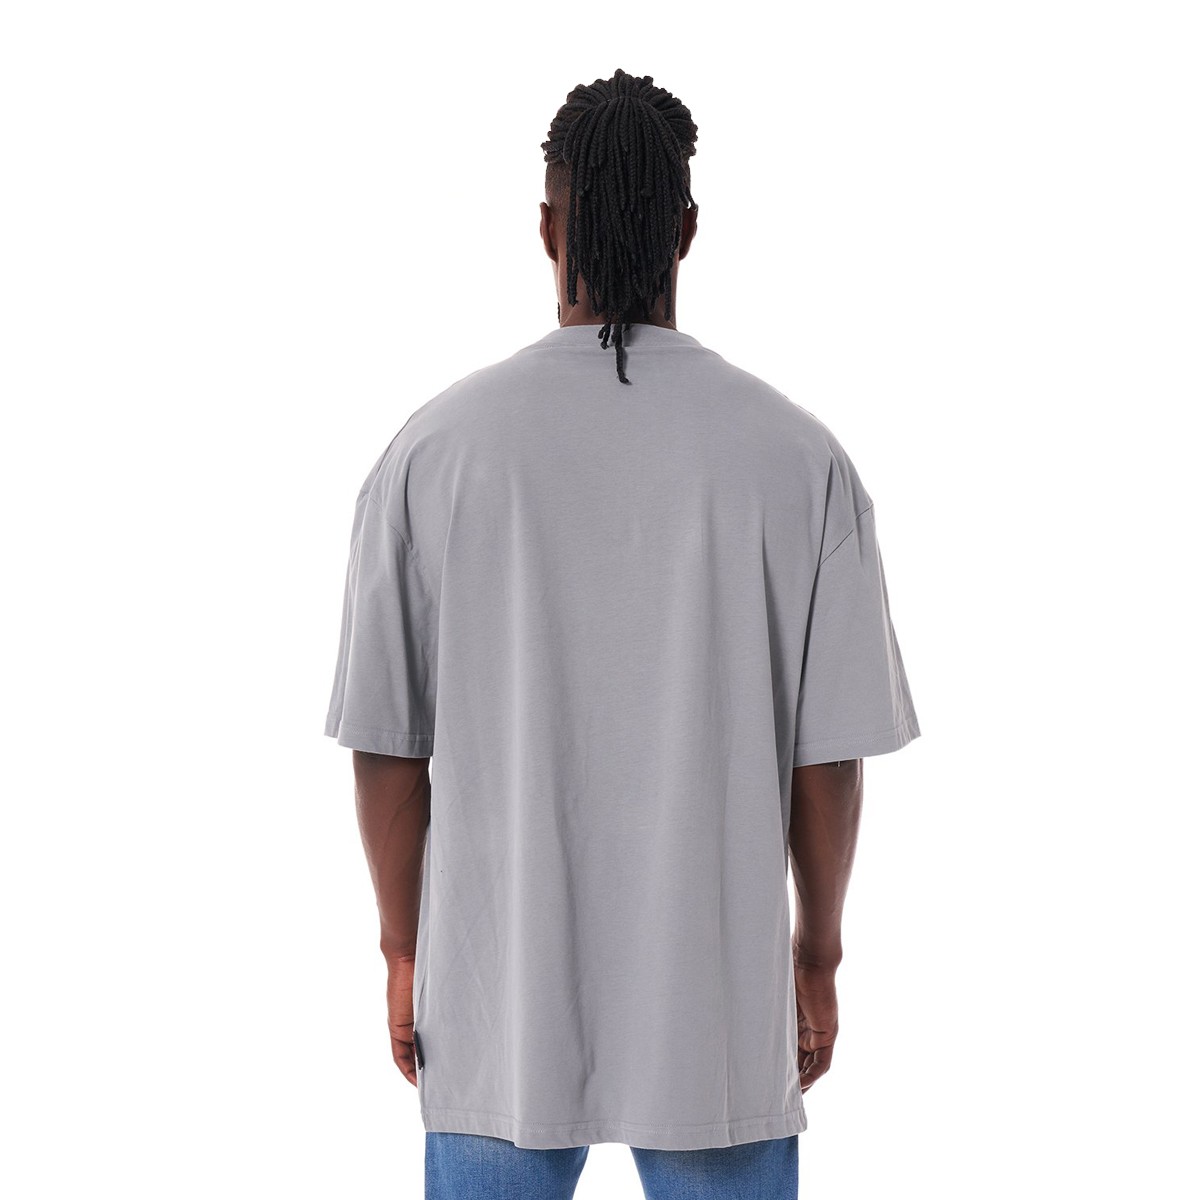 Ghetto Off Limits Burning Man Grey Oversize T-Shirt TS-20007